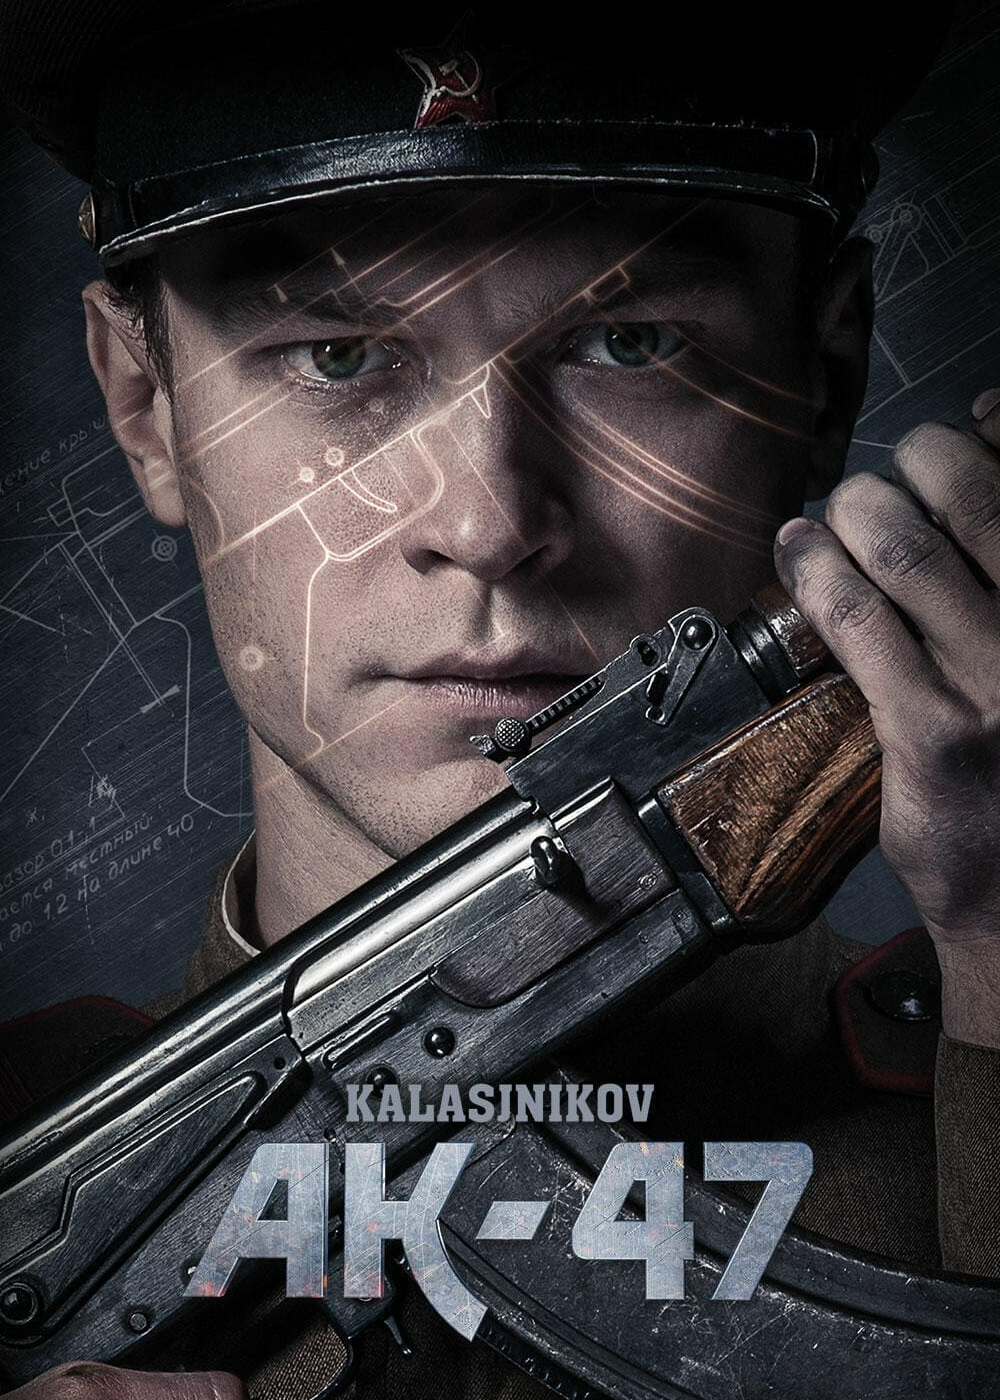 Poster Phim Kalashnikov (Kalashnikov)